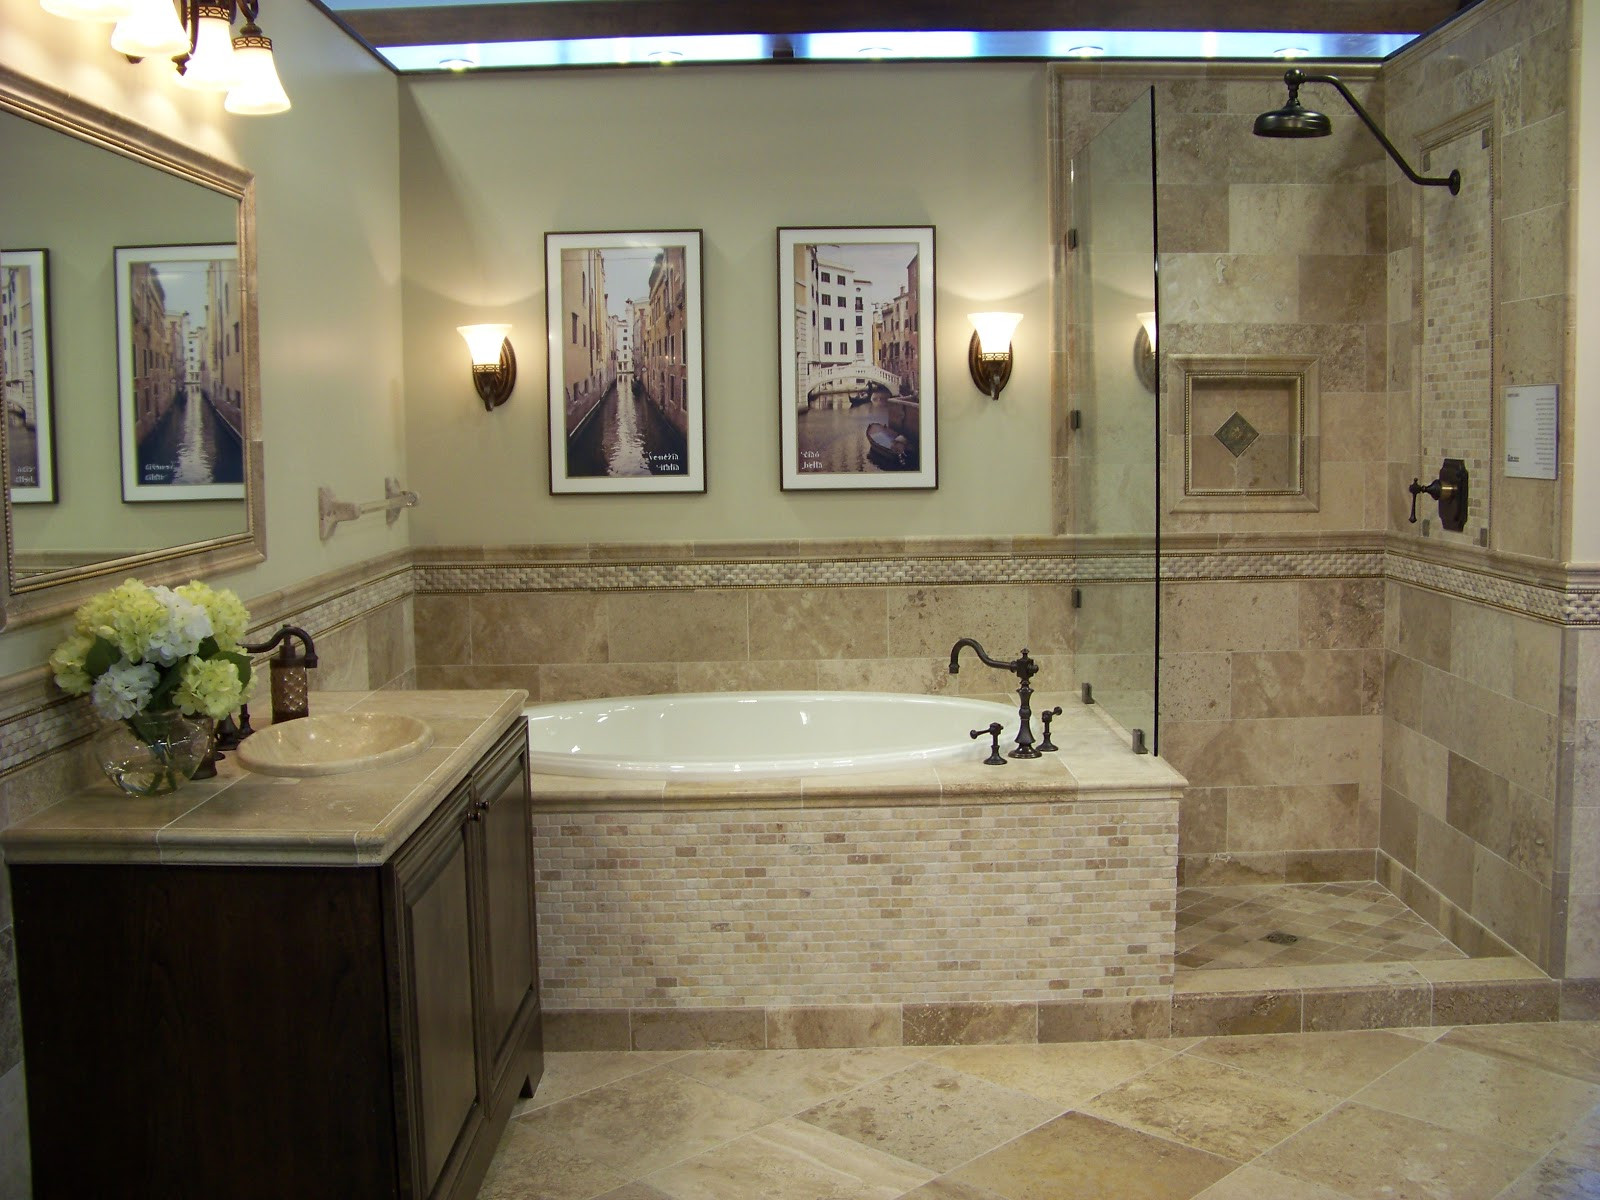 Master Bathroom Tile Ideas
 Home Decor Bud ista Bathroom Inspiration The Tile Shop